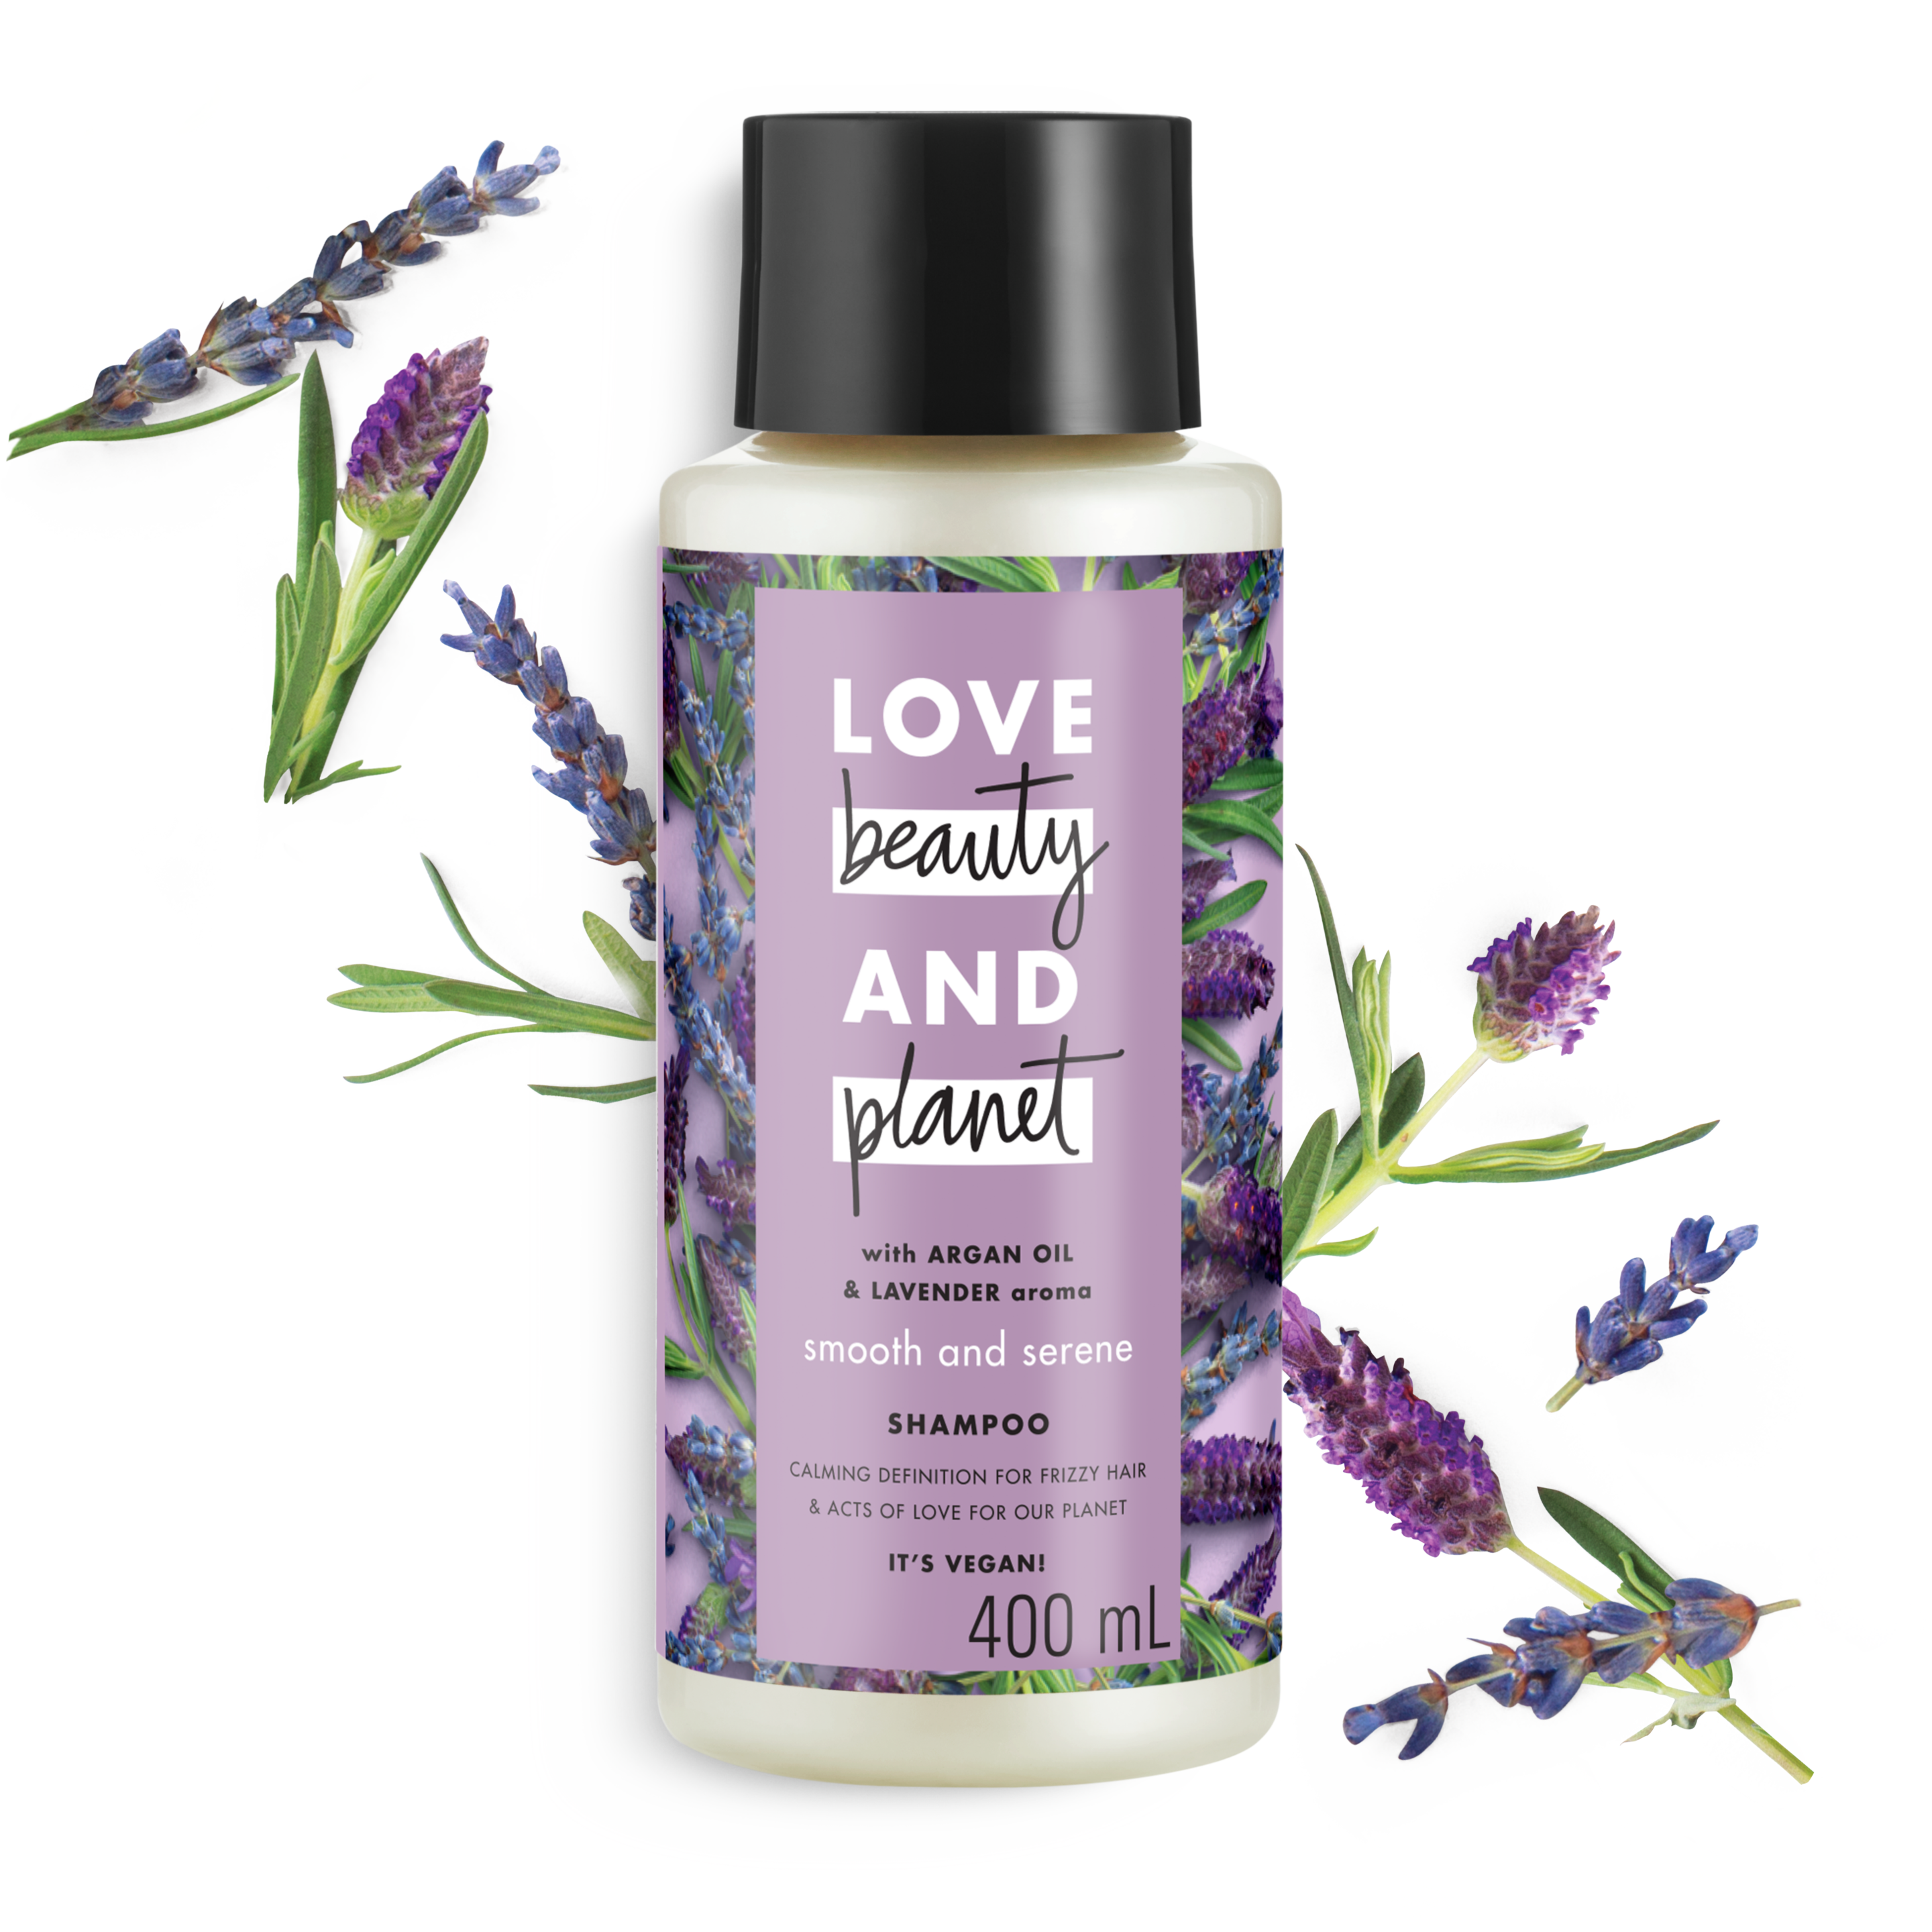 Tampak depan kemasan Love Beauty and Planet Argan Oil & Lavender Shampoo ukuran 400 ml Text